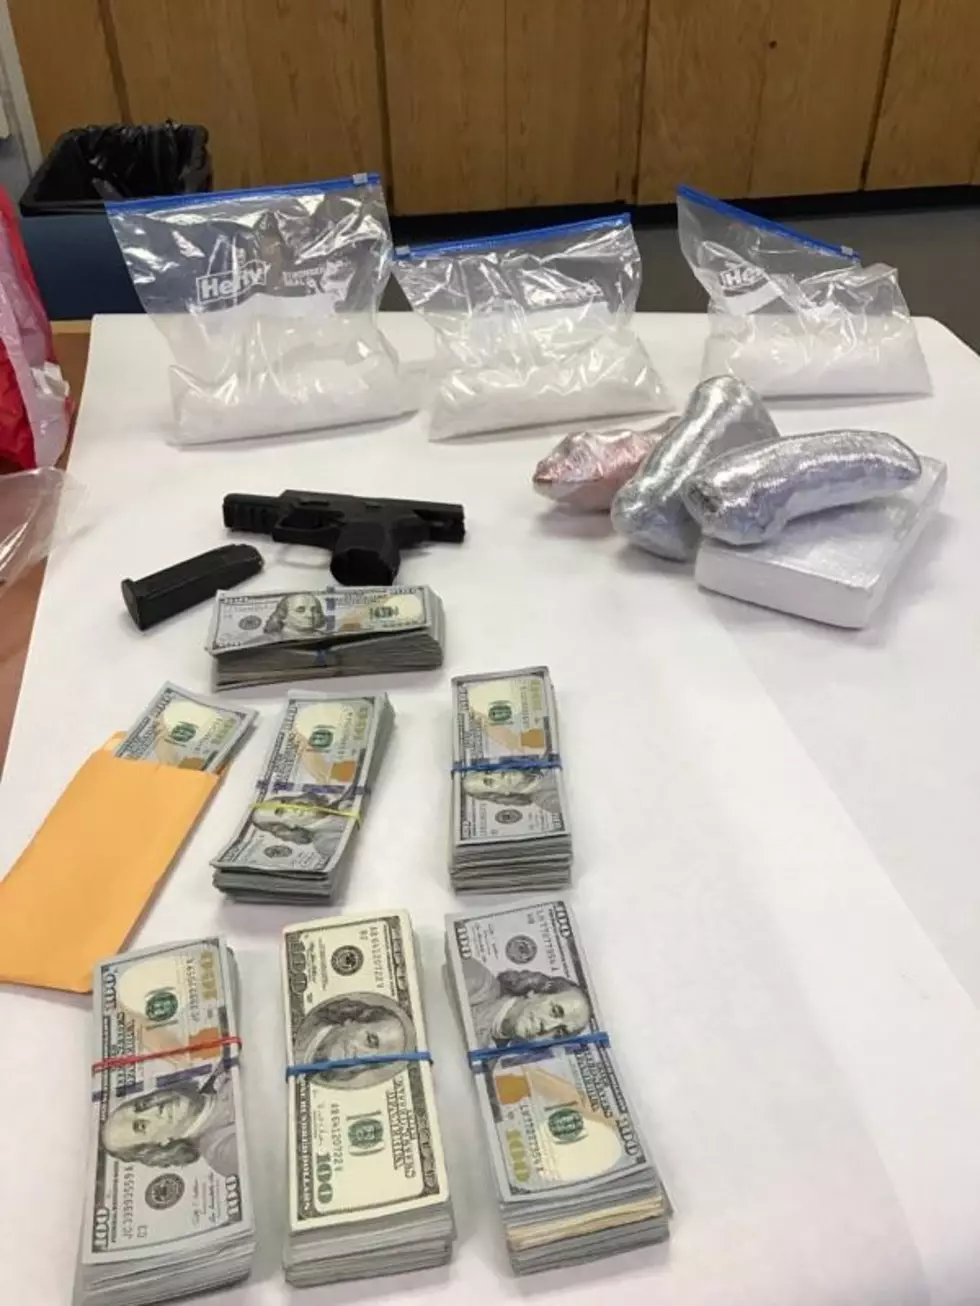 Huge Oregon Drug Bust Nets 10 Lbs of Drugs, Cash, Weapons